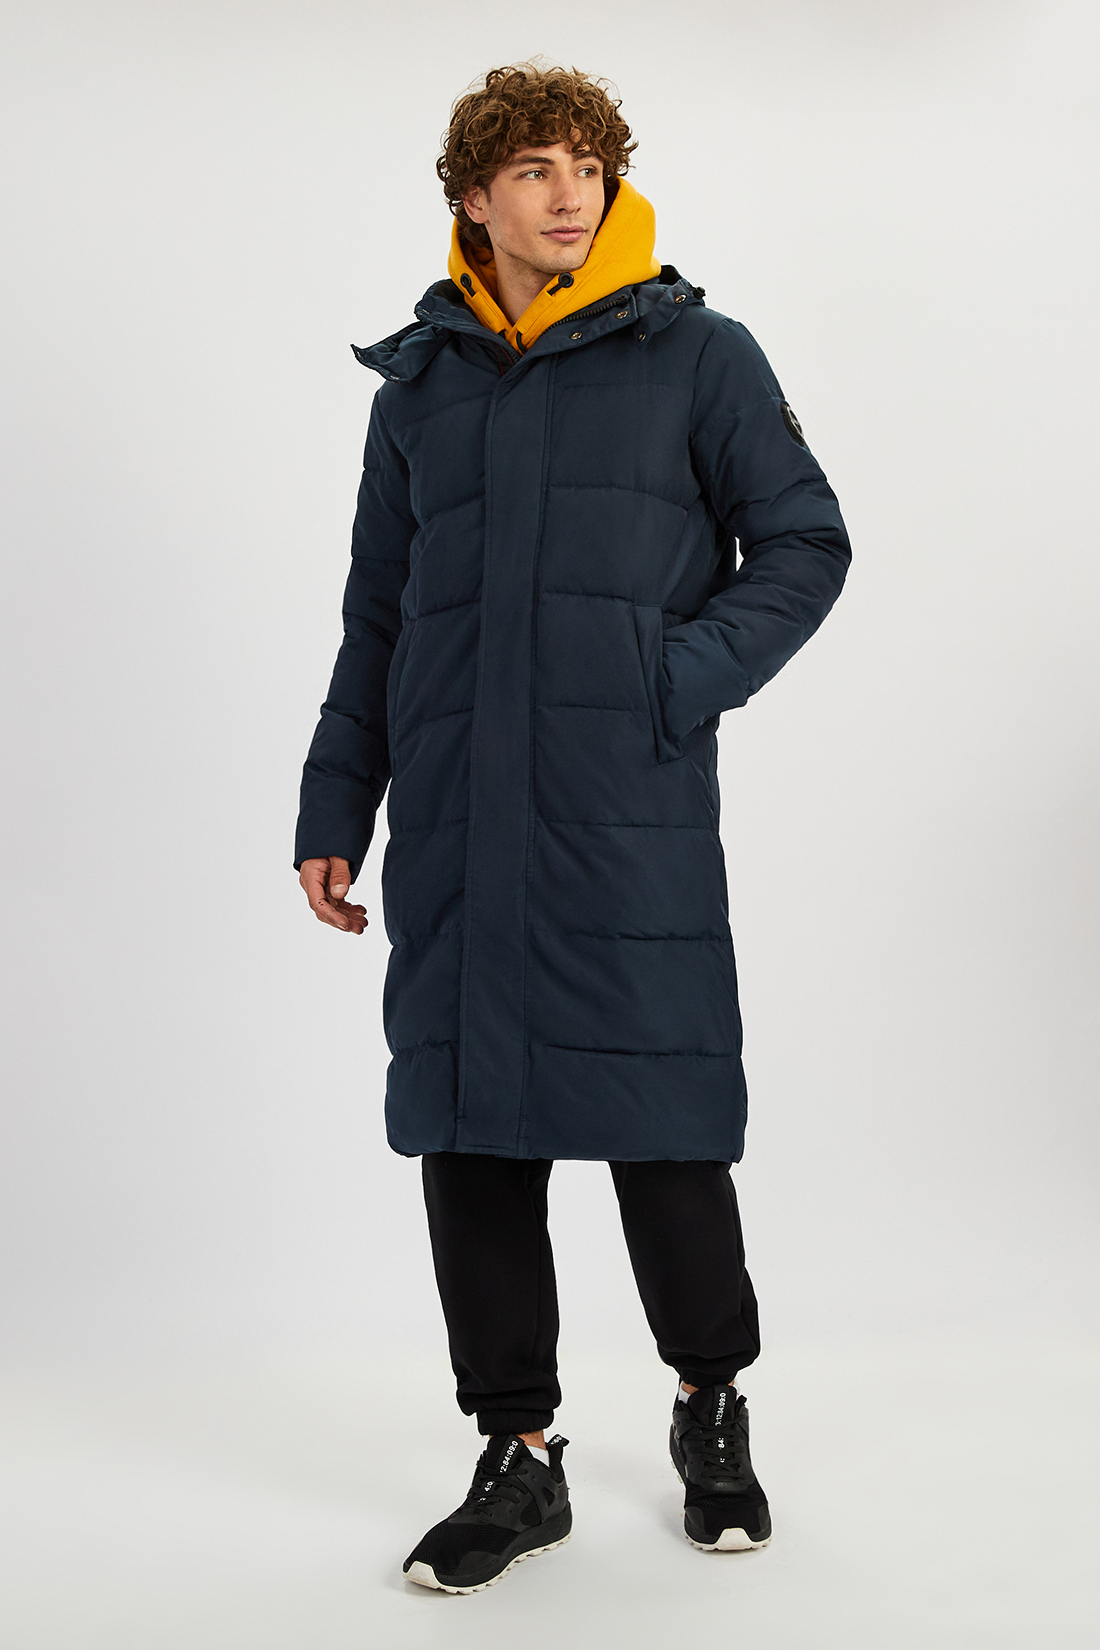 Длинная куртка (эко пух) (арт. baon B541506), размер M, цвет синий Длинная куртка (эко пух) (арт. baon B541506) - фото 1